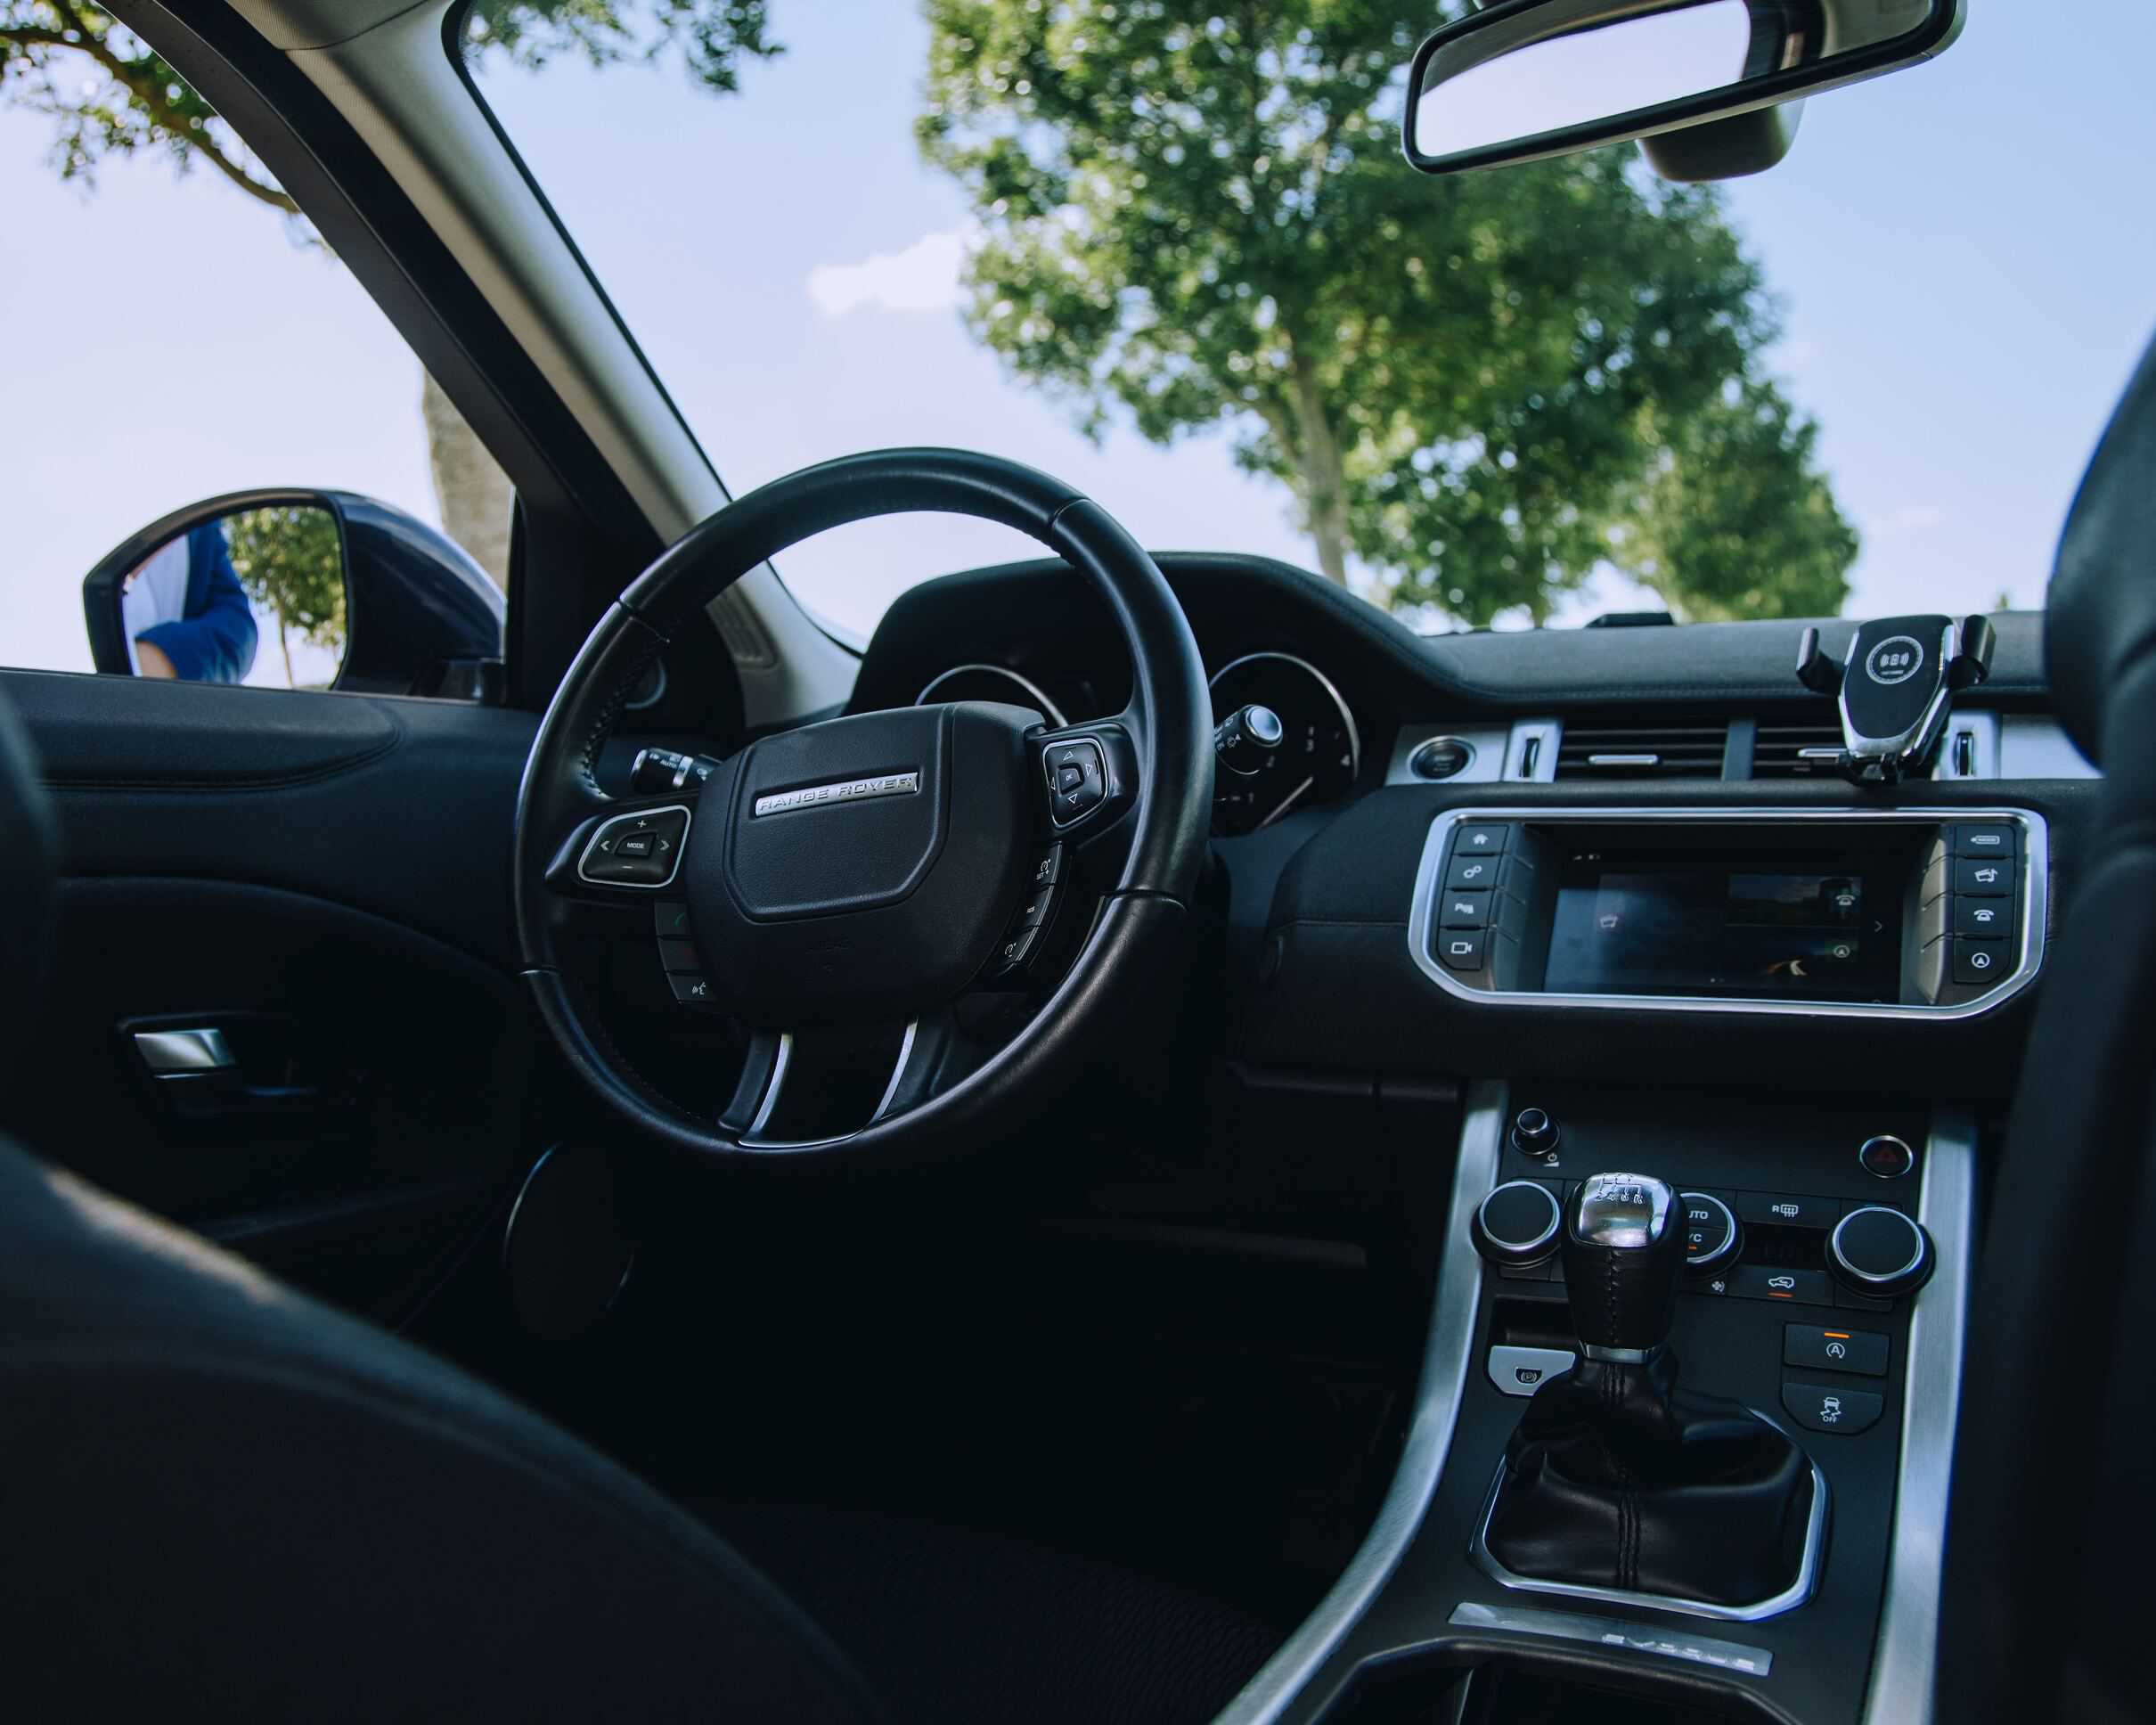 Range Rover Evoque Interior - A Luxurious and Elegant Cabin